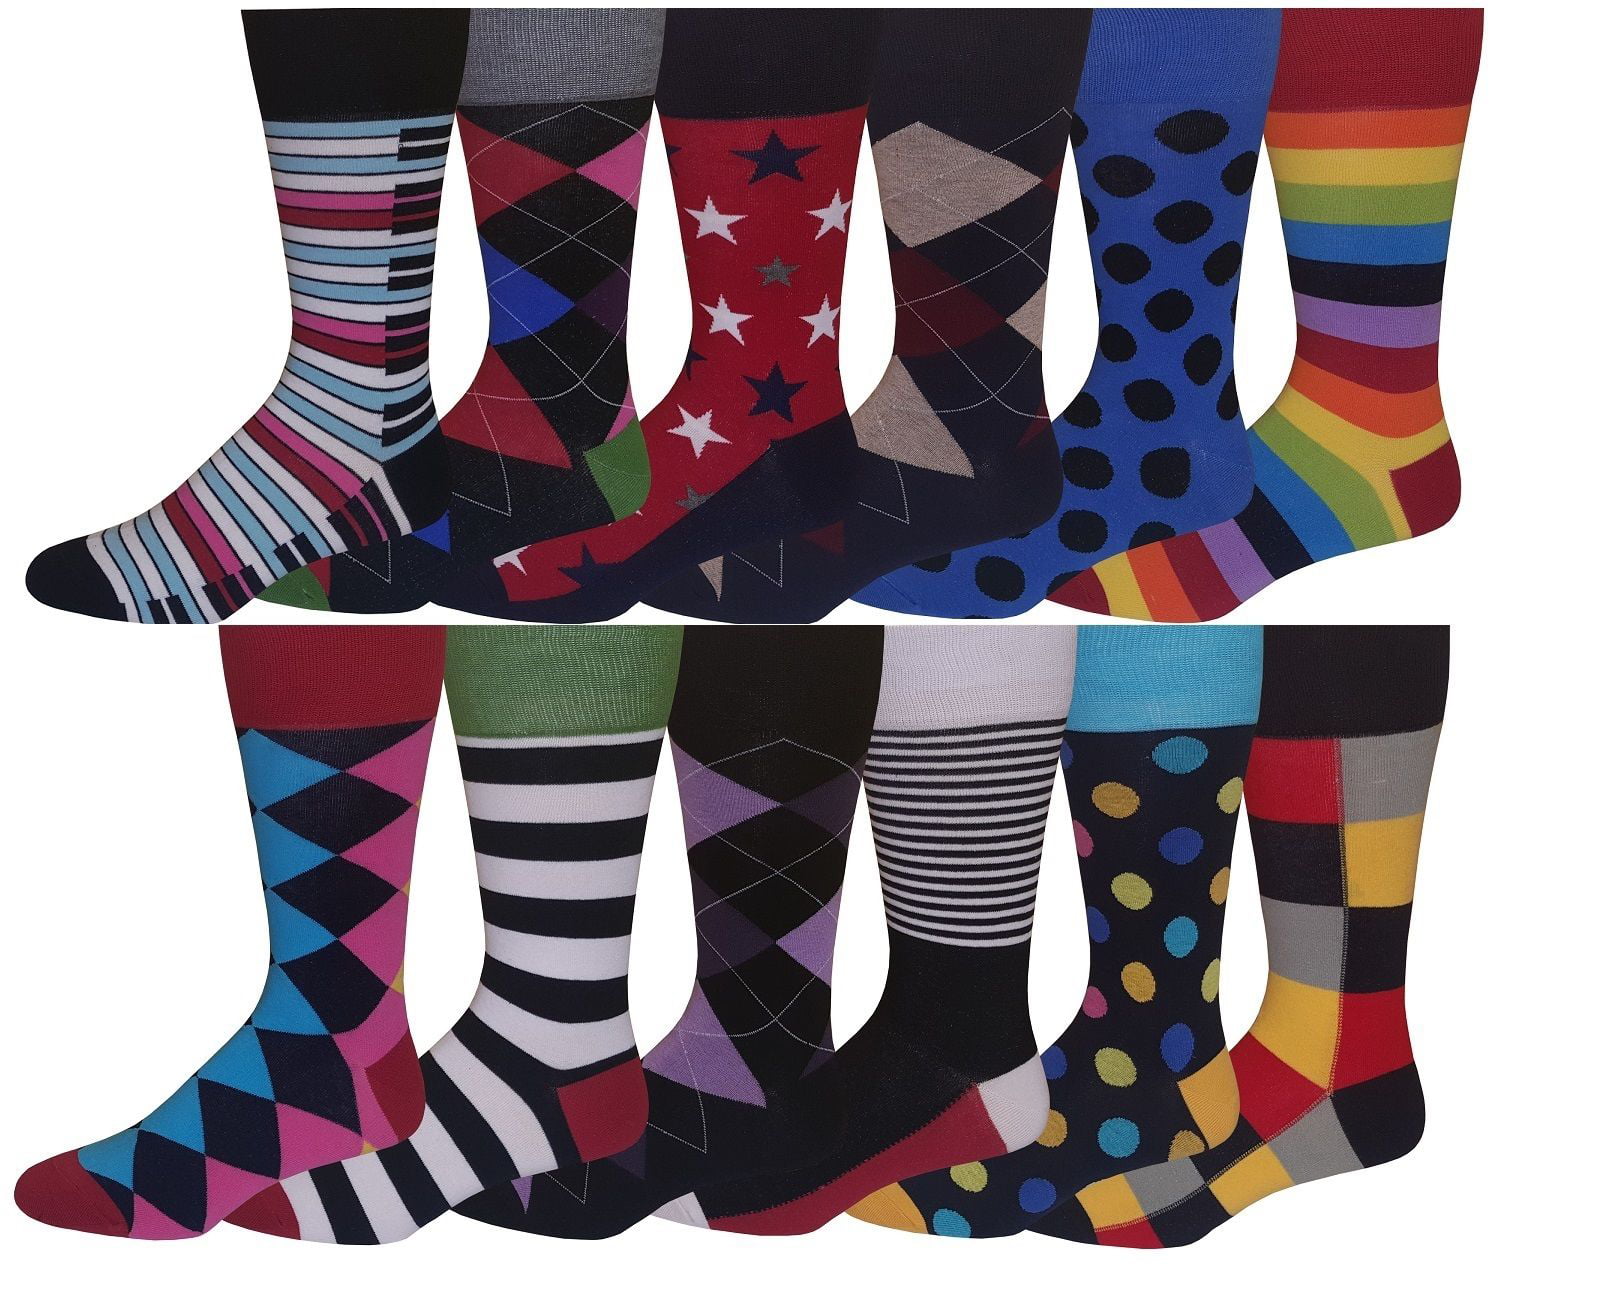 12 Pairs Men's Colorful Funky Design Fashion Premium Cotton Dress Socks